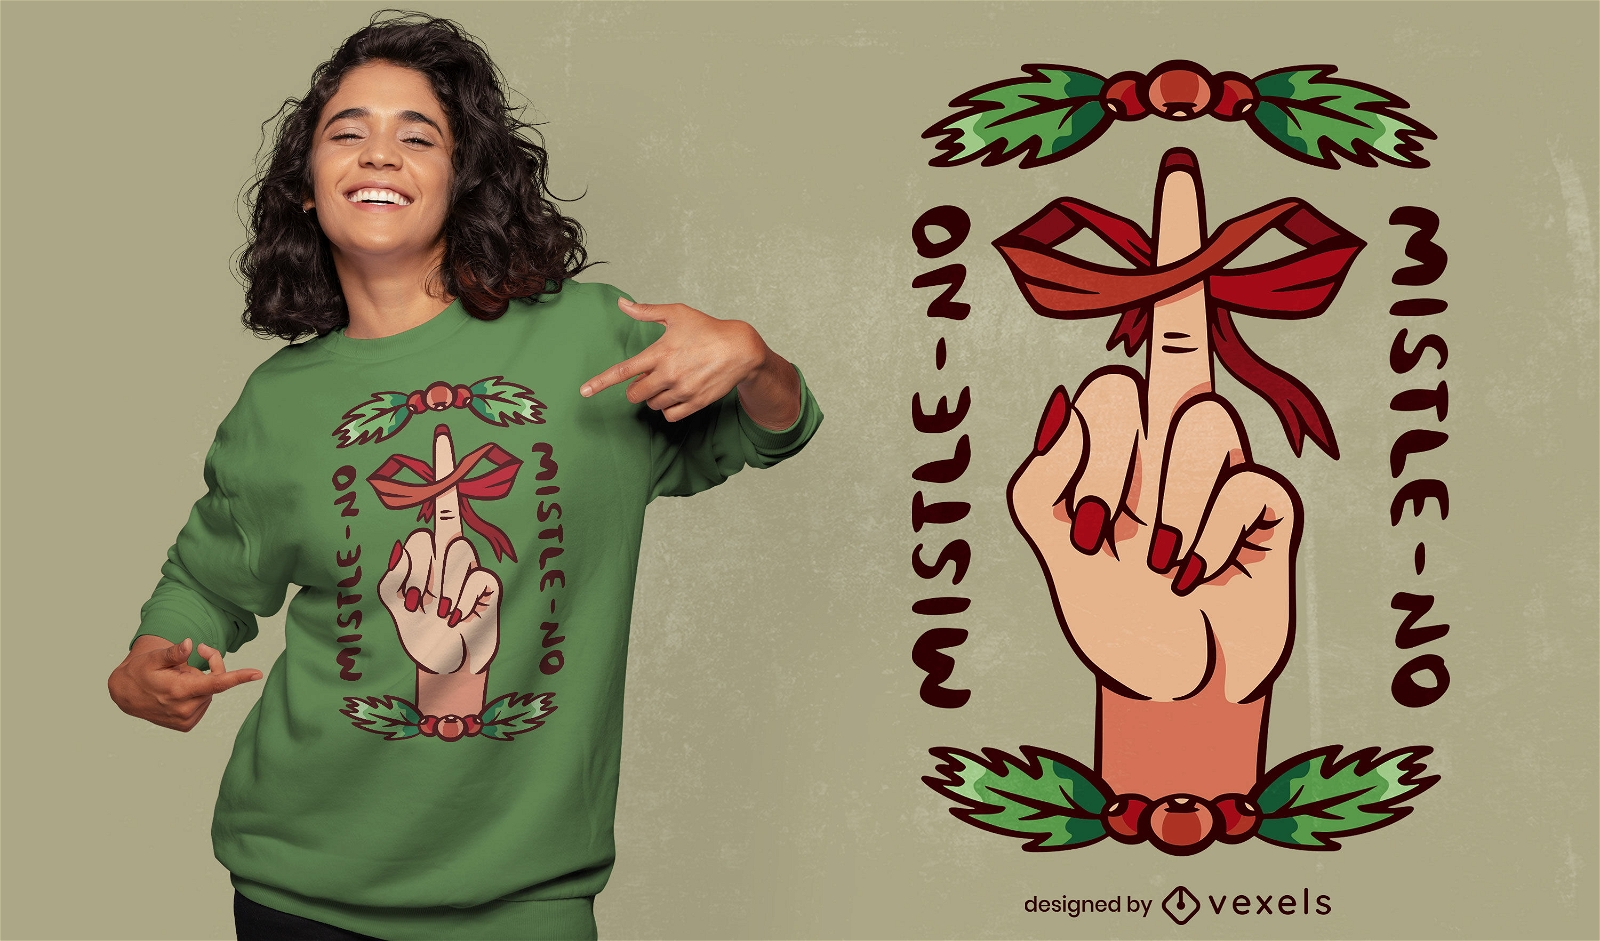 Funny anti-Christmas t-shirt design